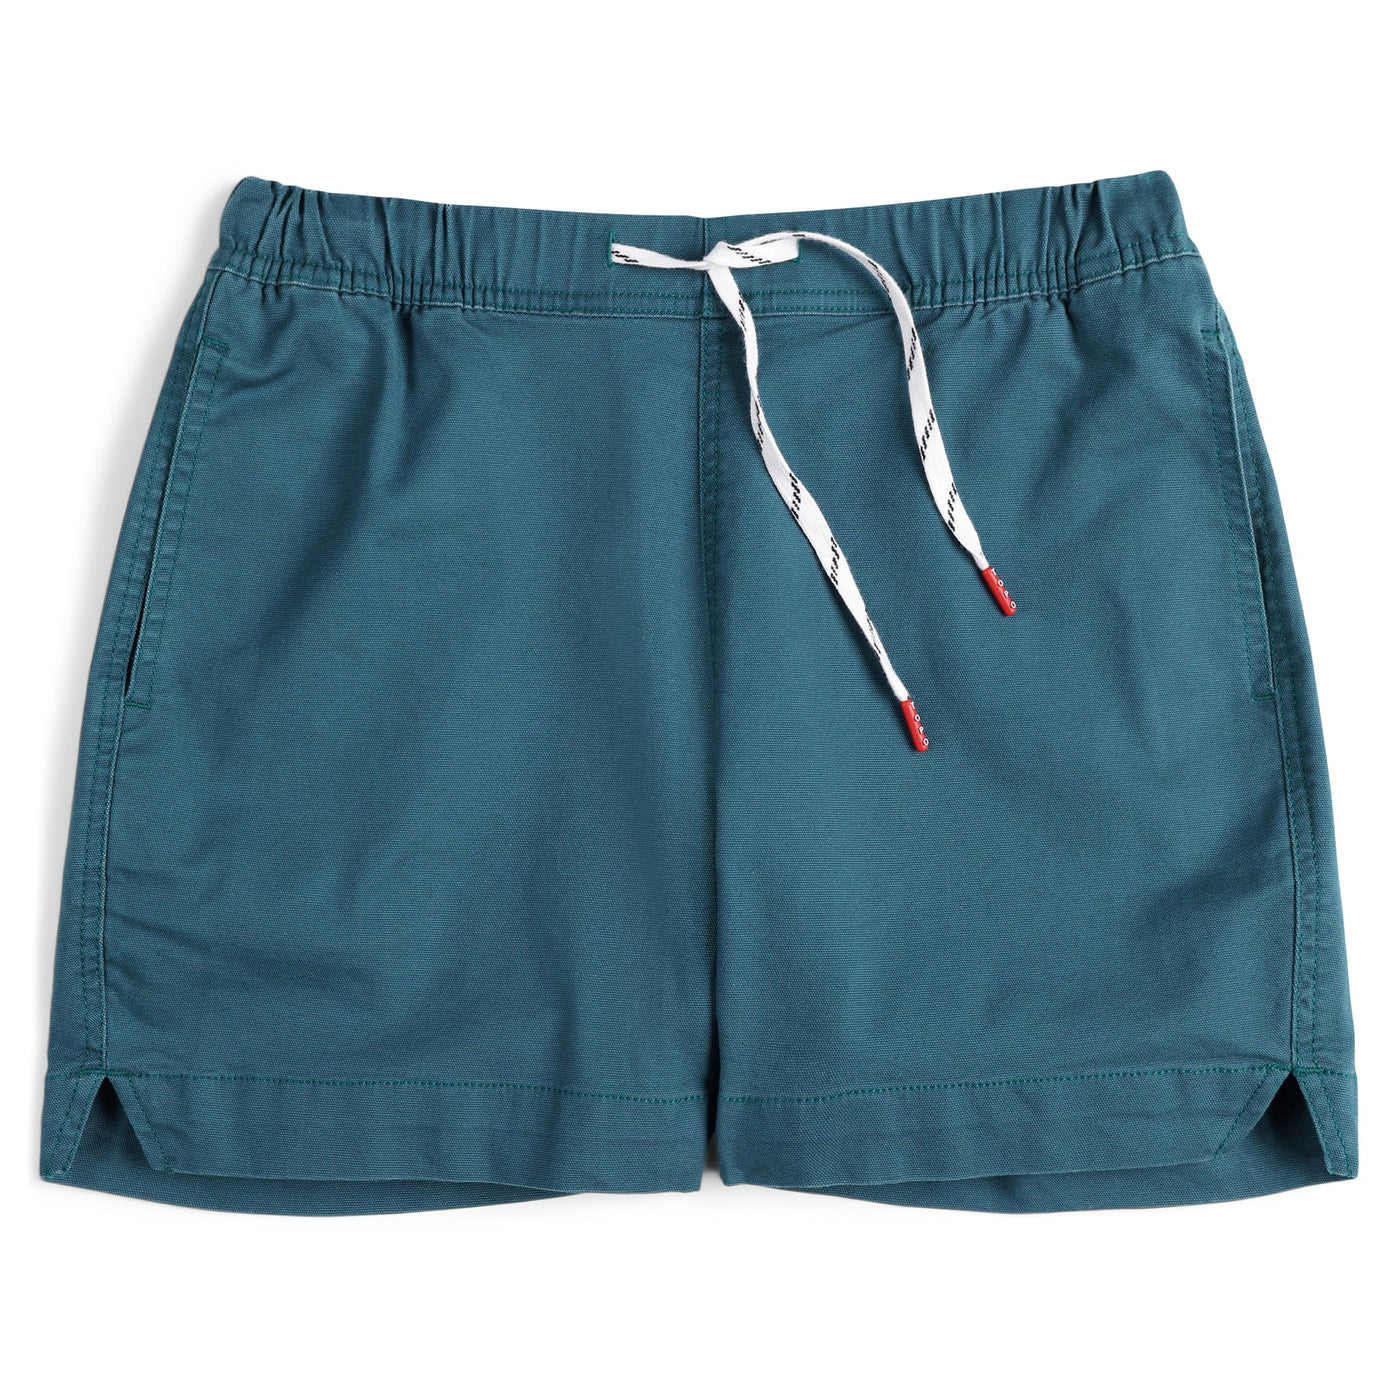 Topo Designs Women's drawstring Dirt Shorts in 100% organic cotton "Pond Blue" blue.